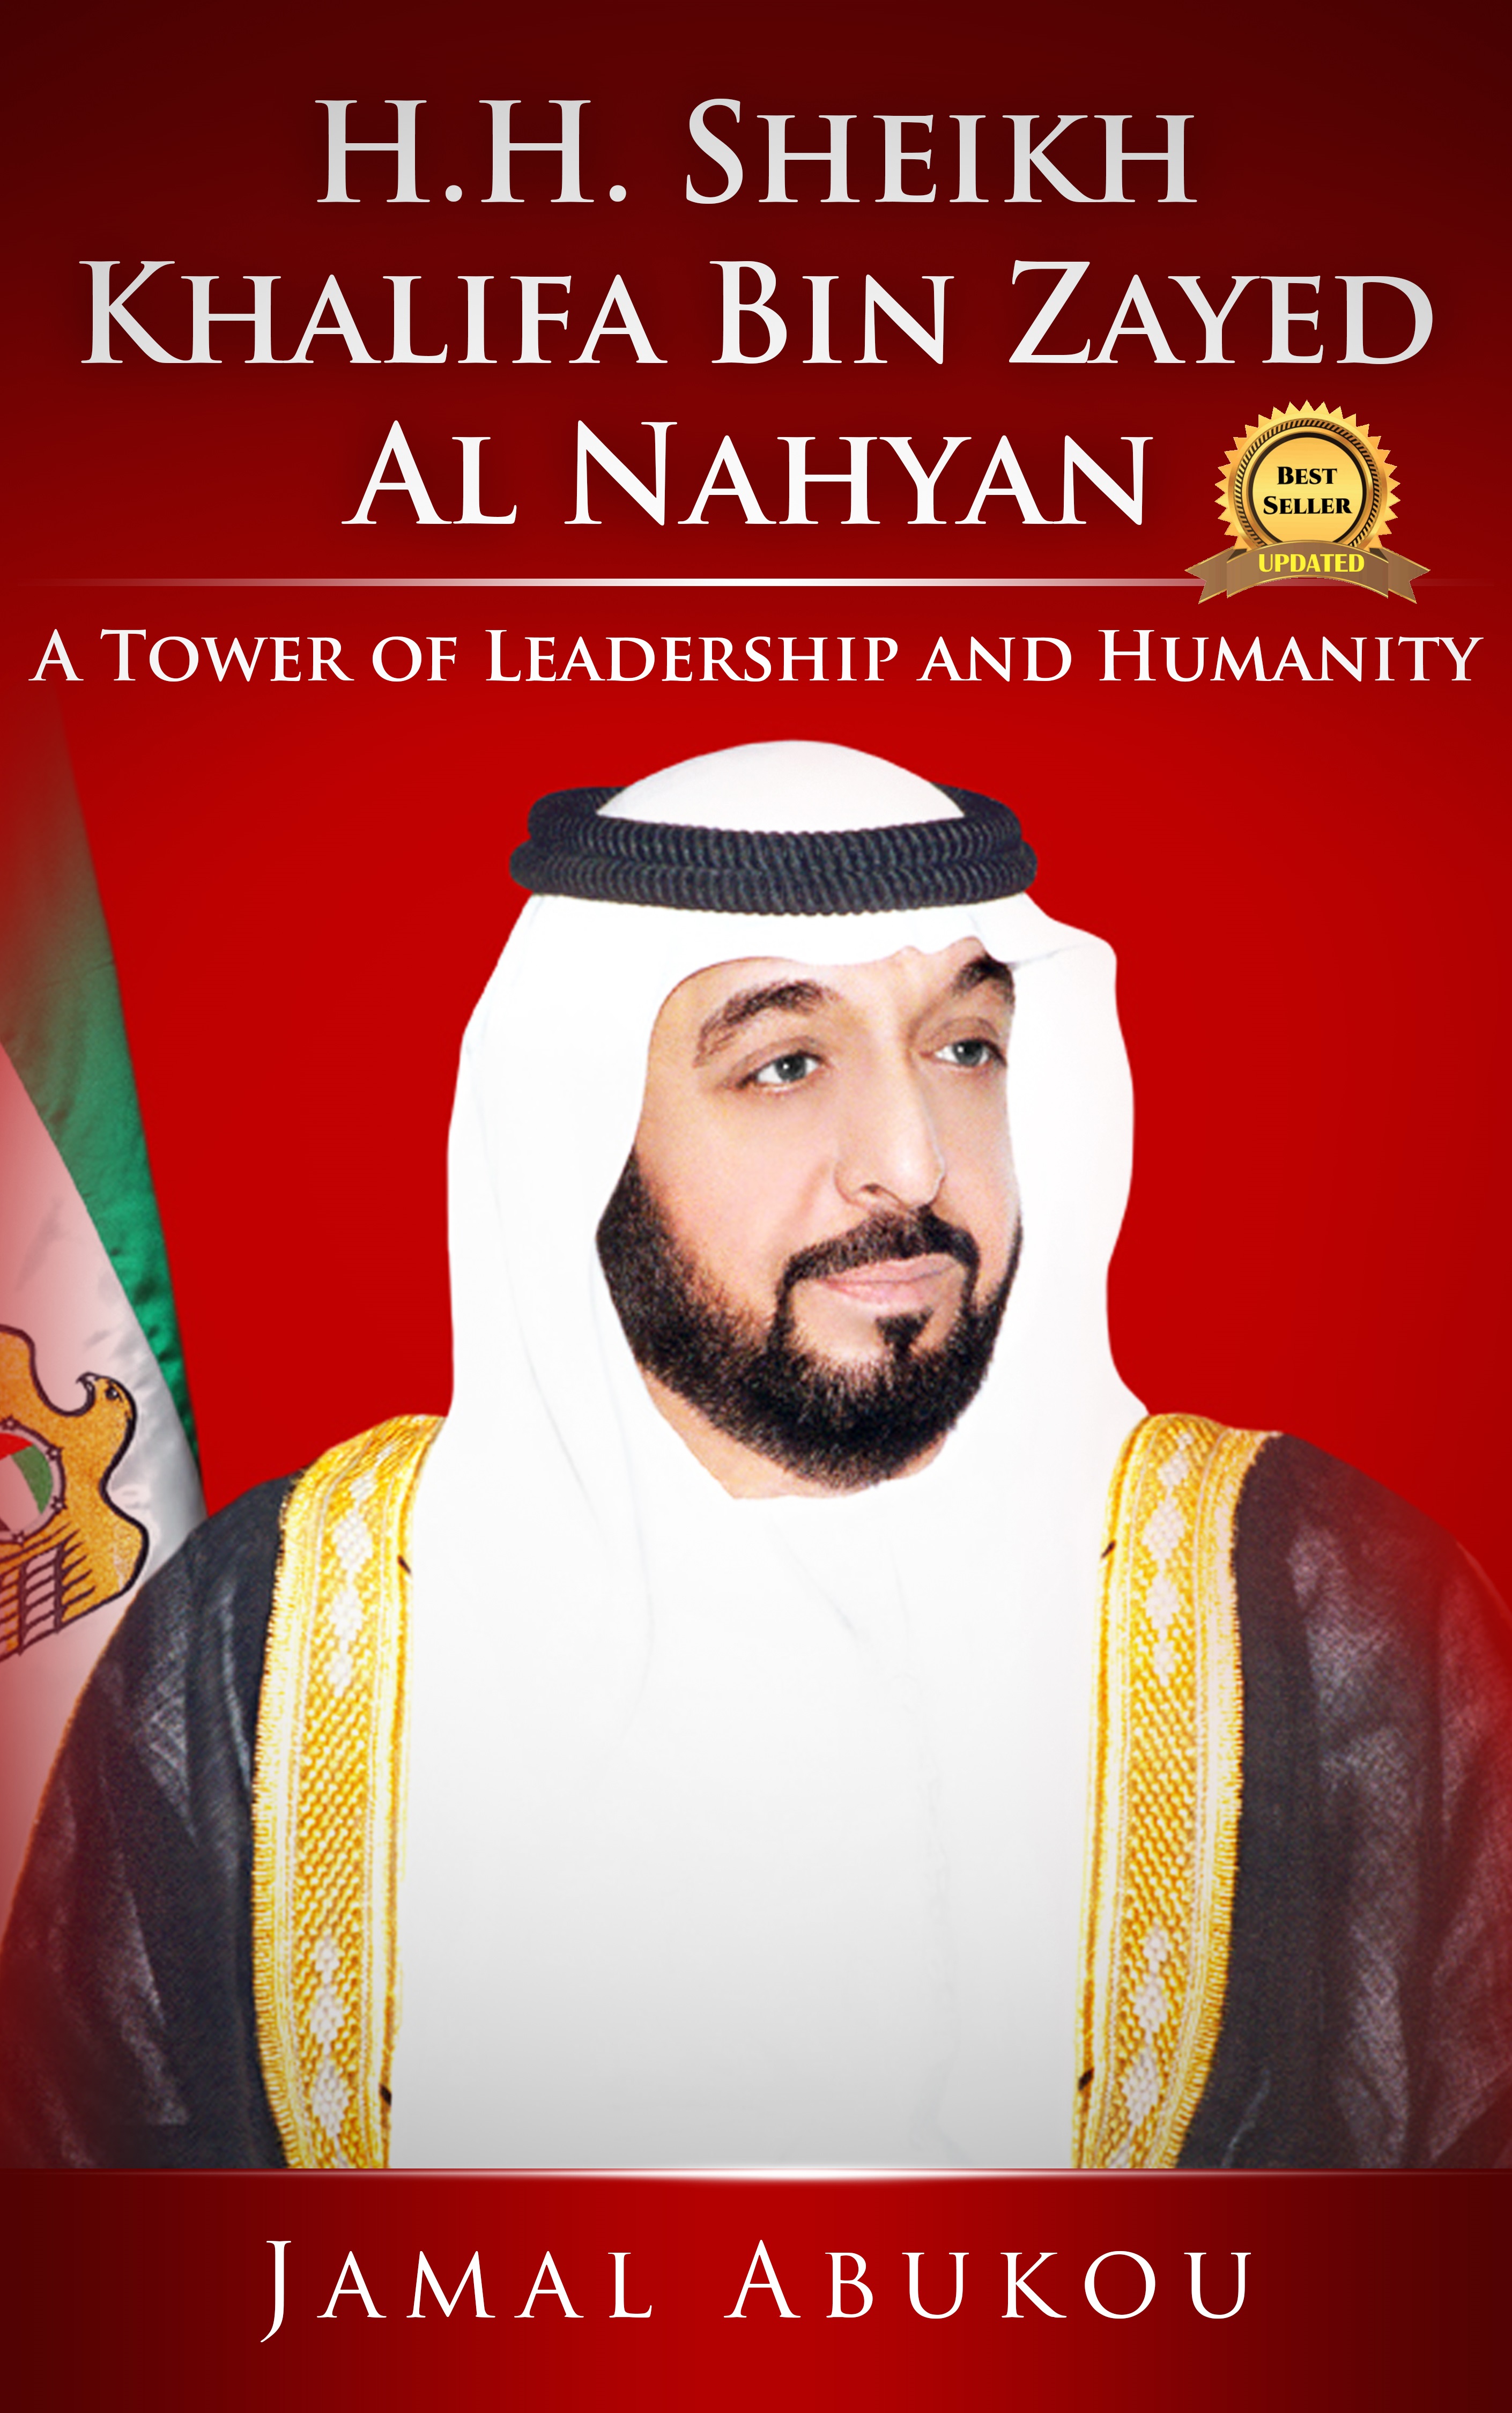 FREE: H.H. Sheikh Khalifa Bin Zayed Al Nahyan by Jamal Abukou